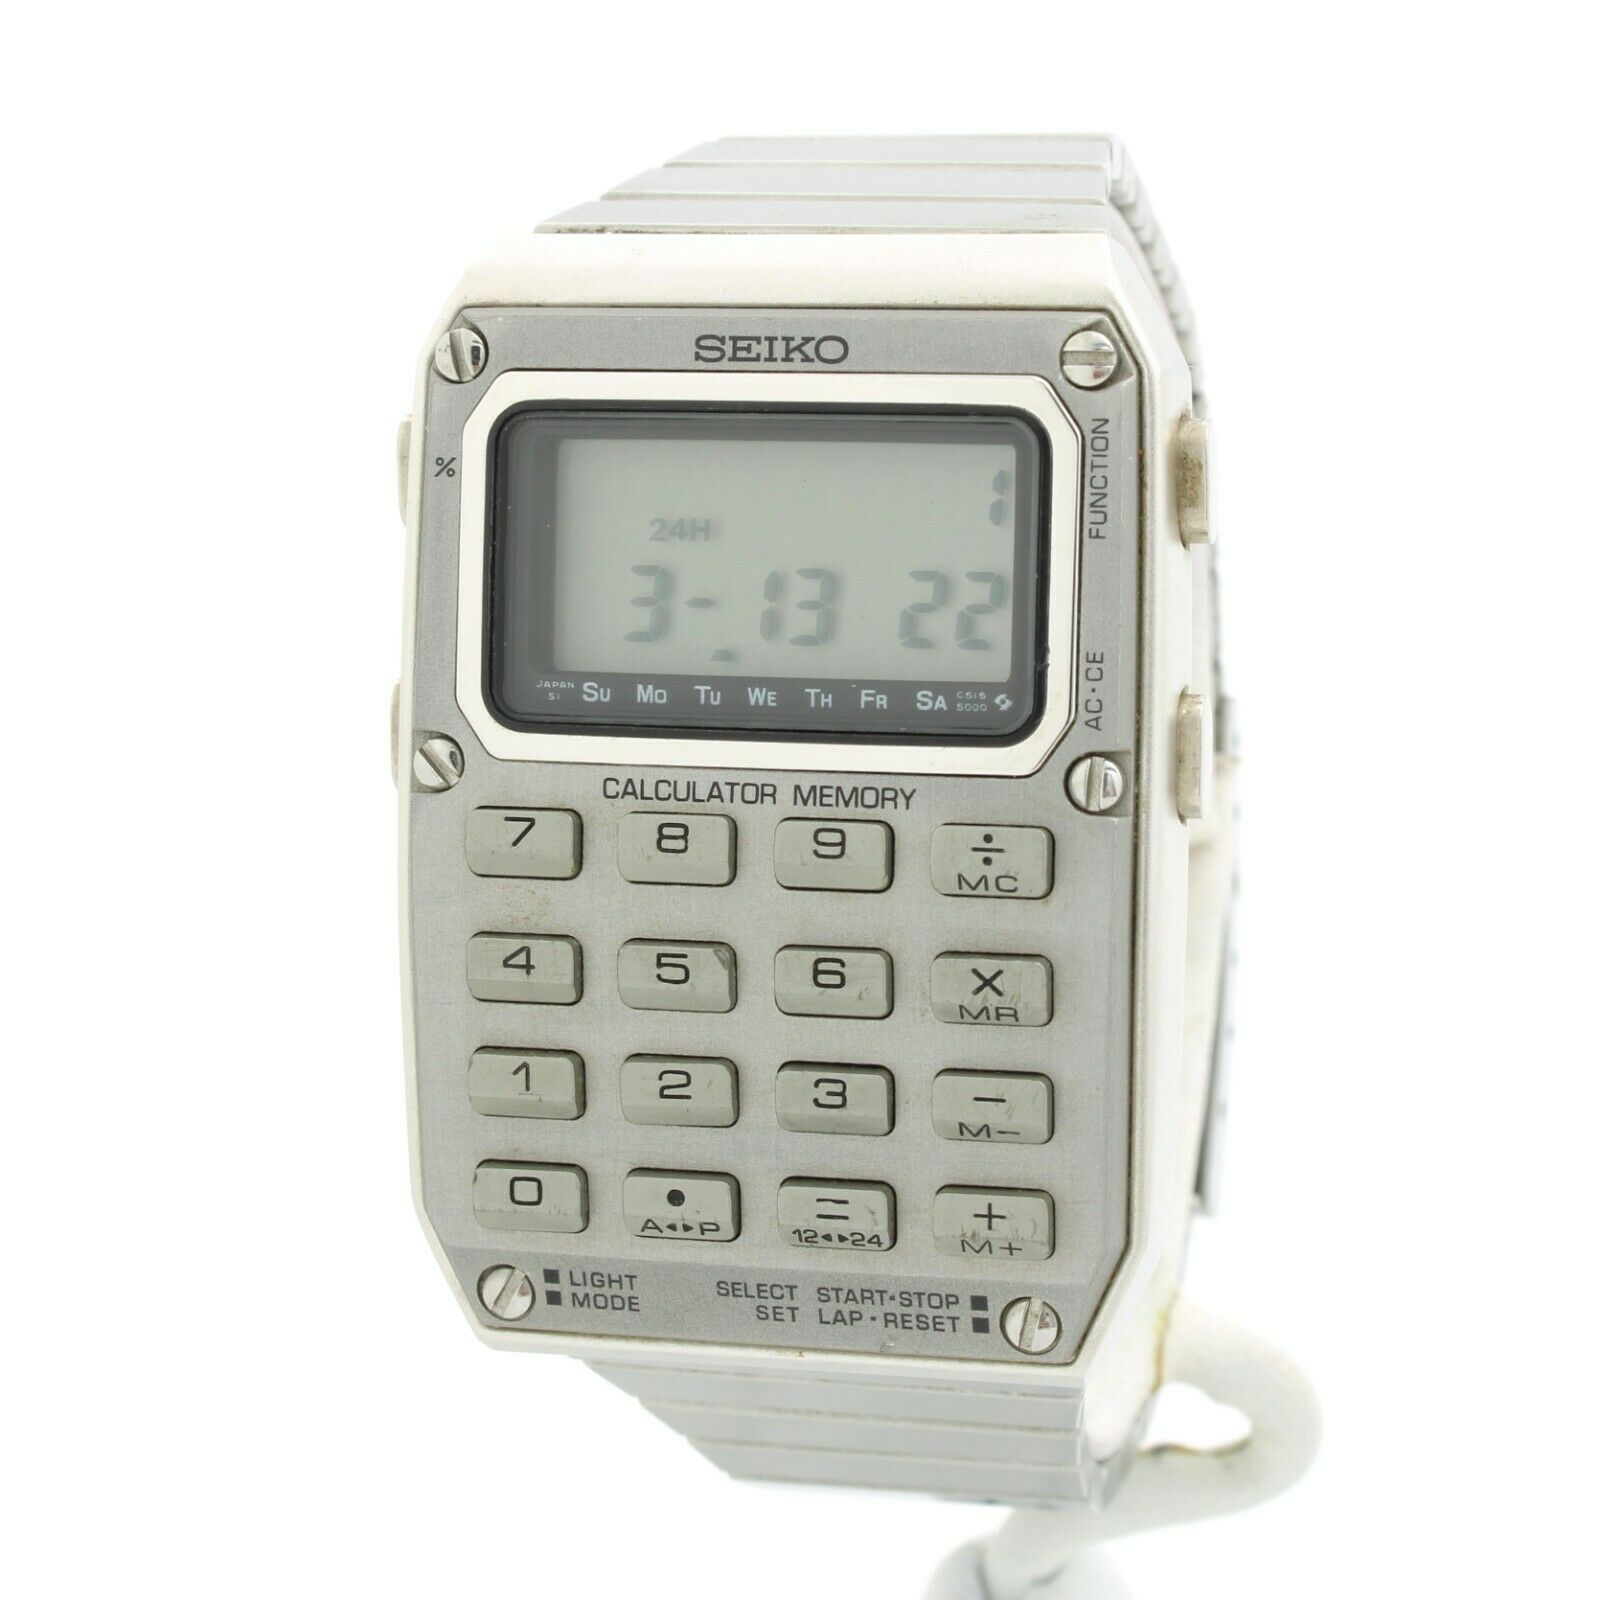 Seiko Retro Space Age Calculator (C515-5009) Market Price | WatchCharts